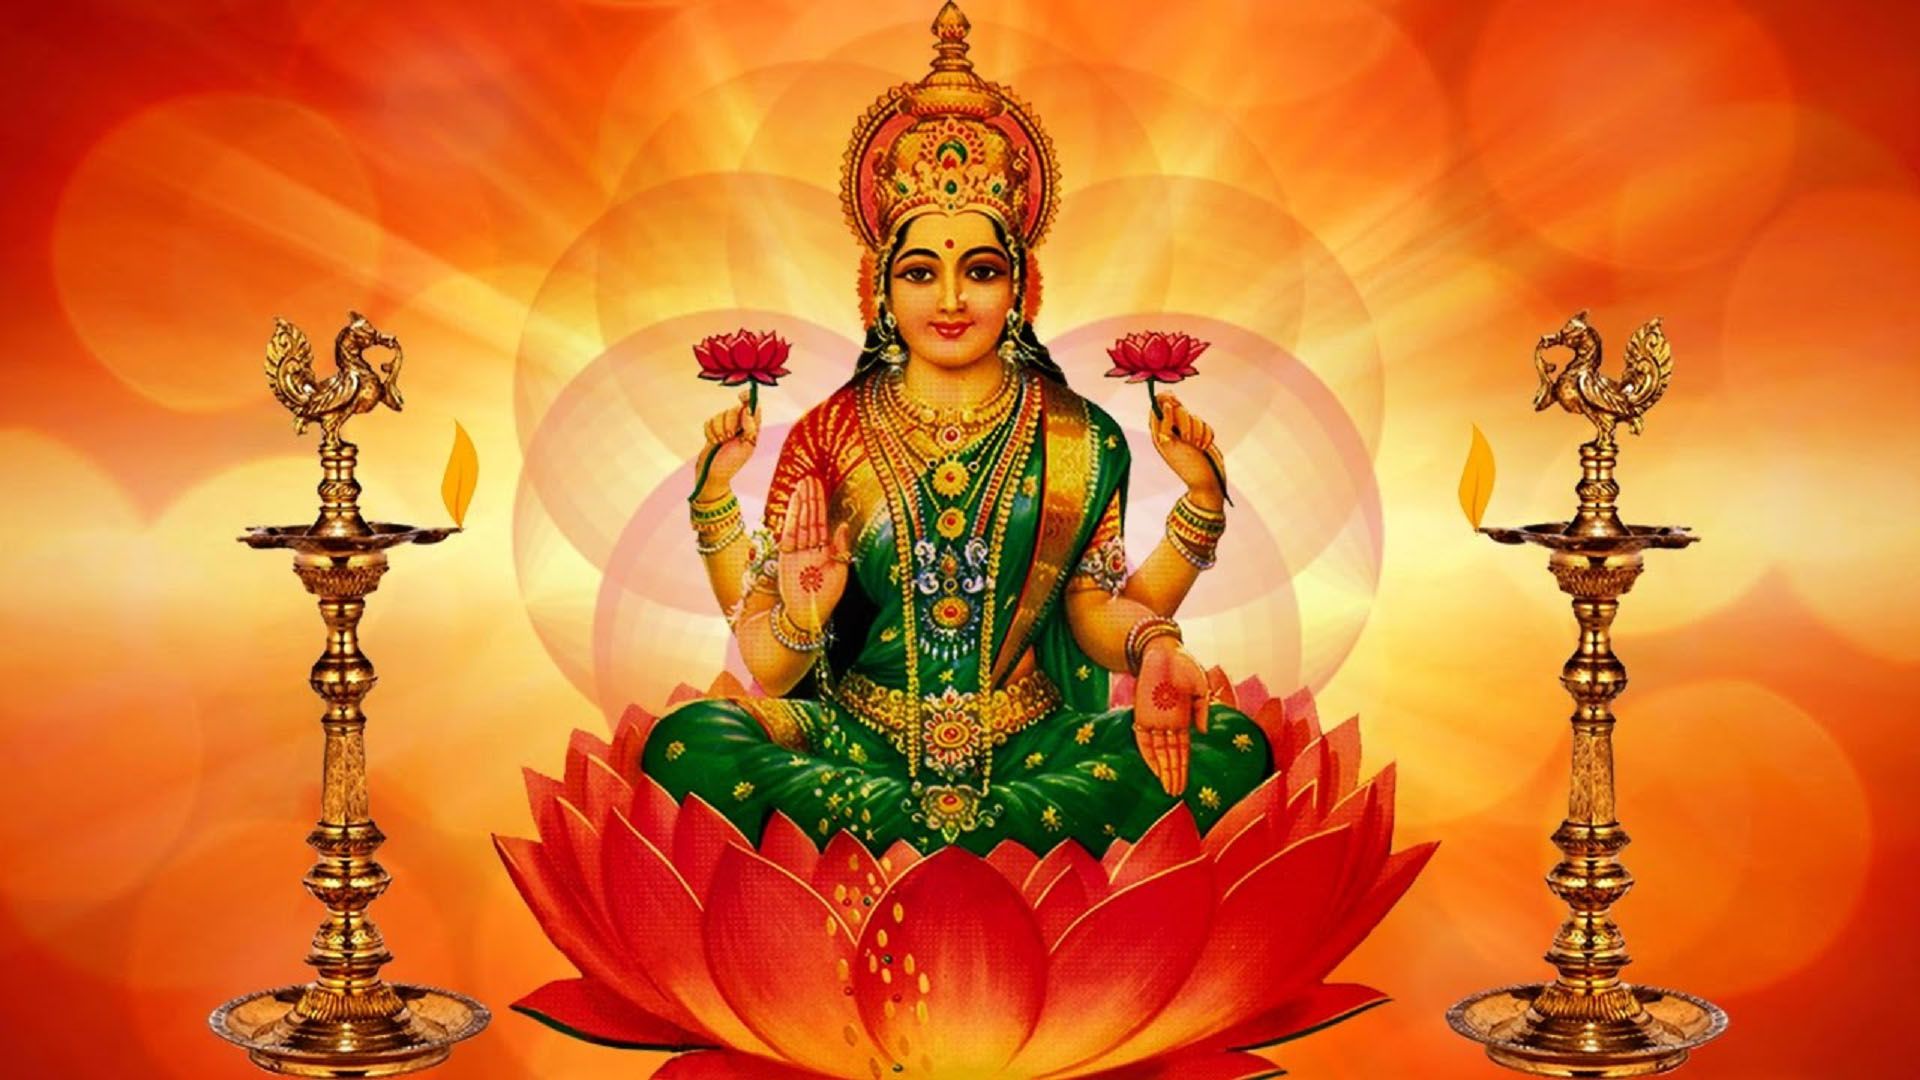 Goddess Lakshmi Wallpaper Free Download. Goddess Maa Lakshmi